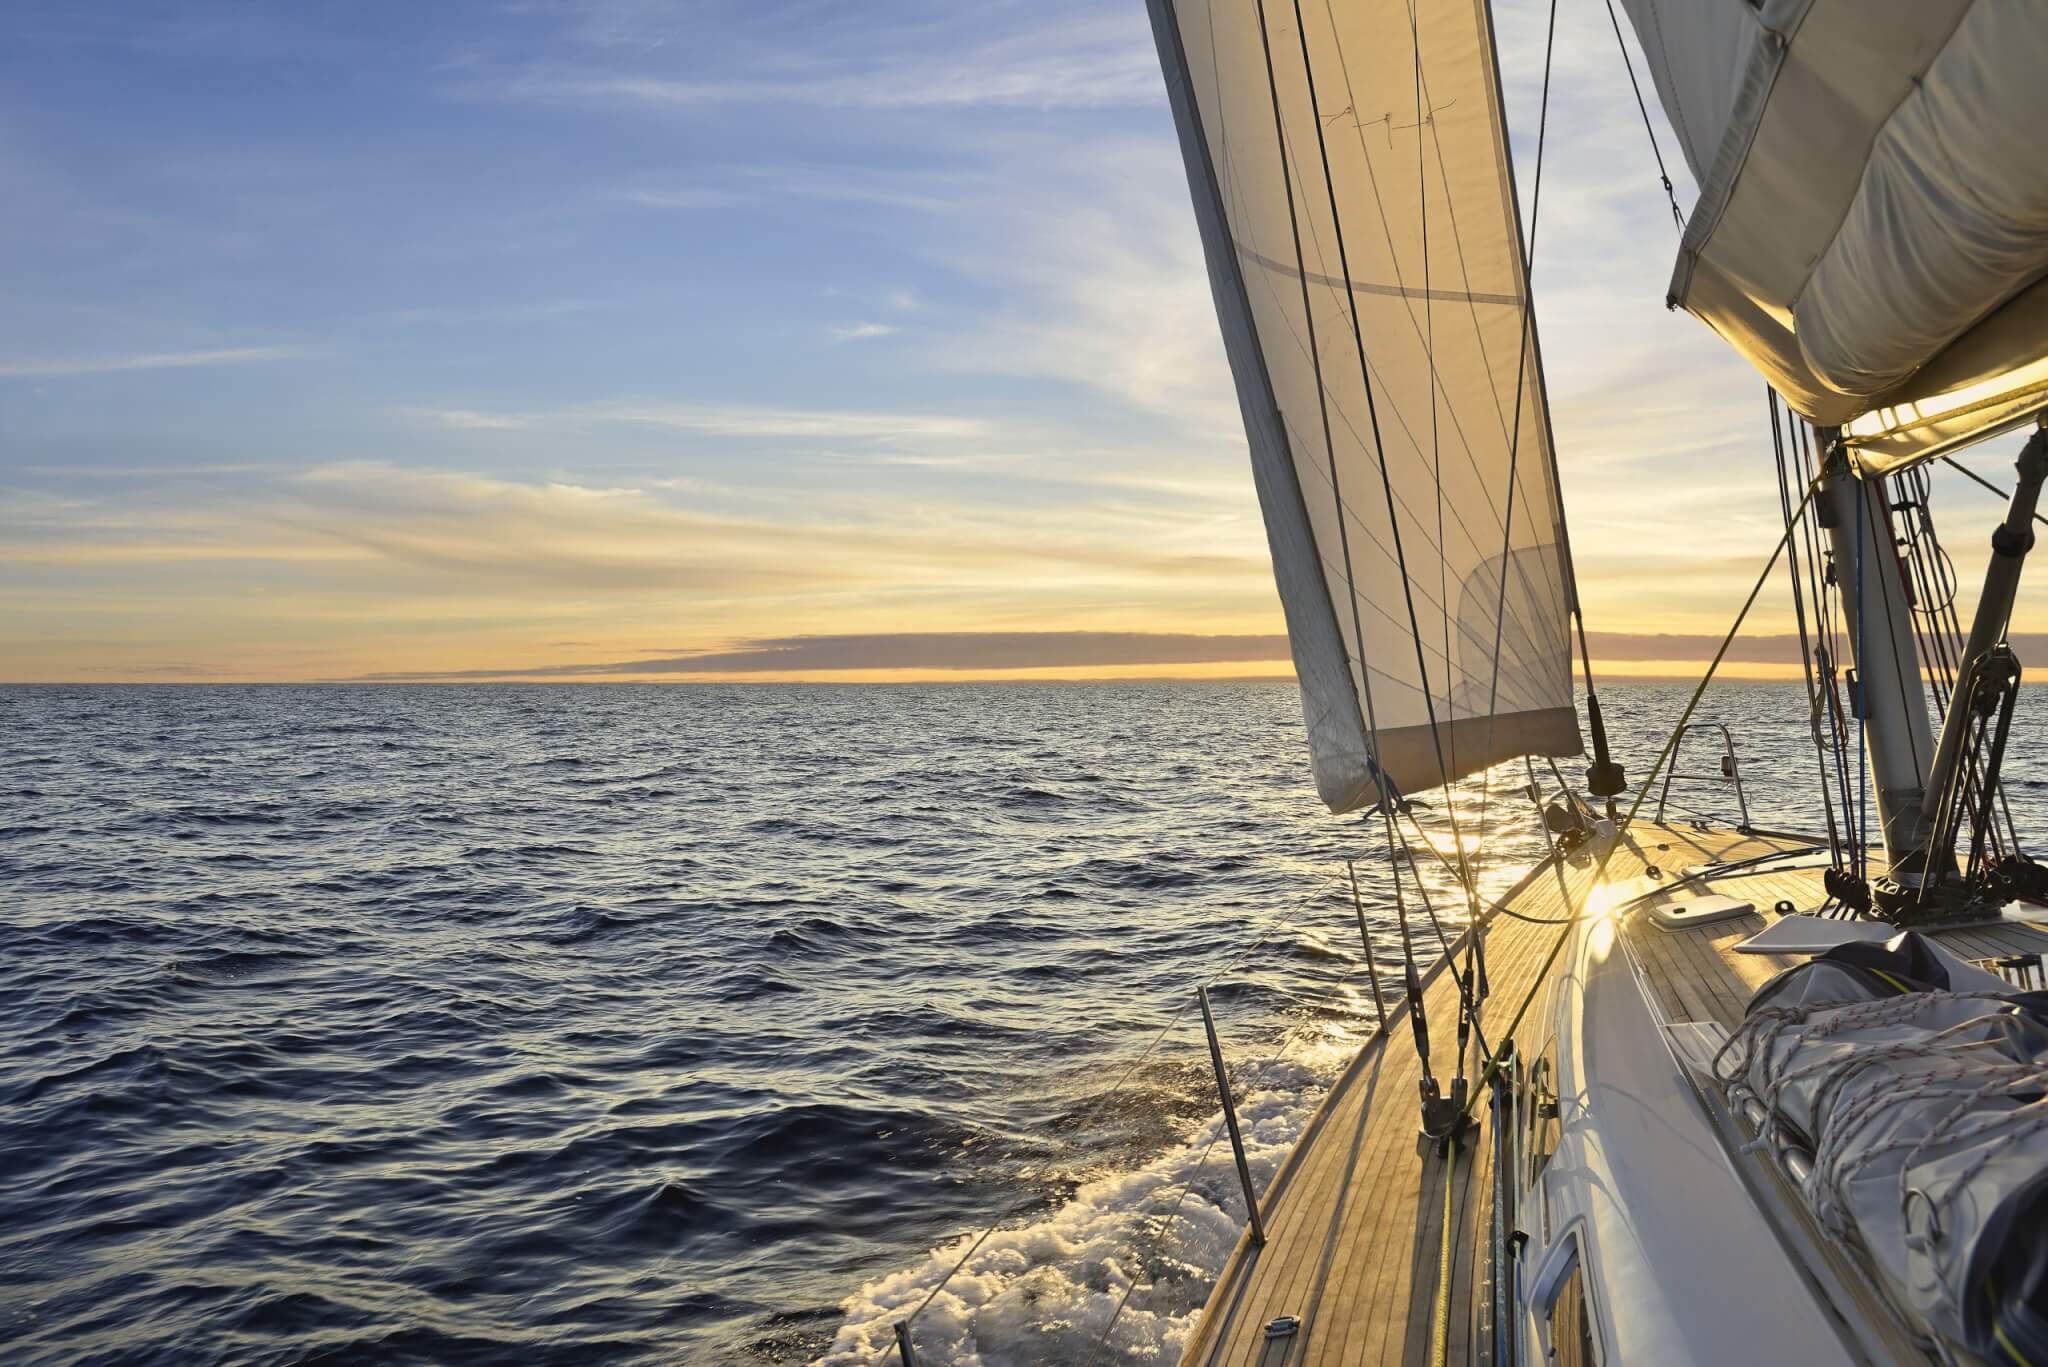 Sailboat Sailing In The Mediterranean Sea At Sunset